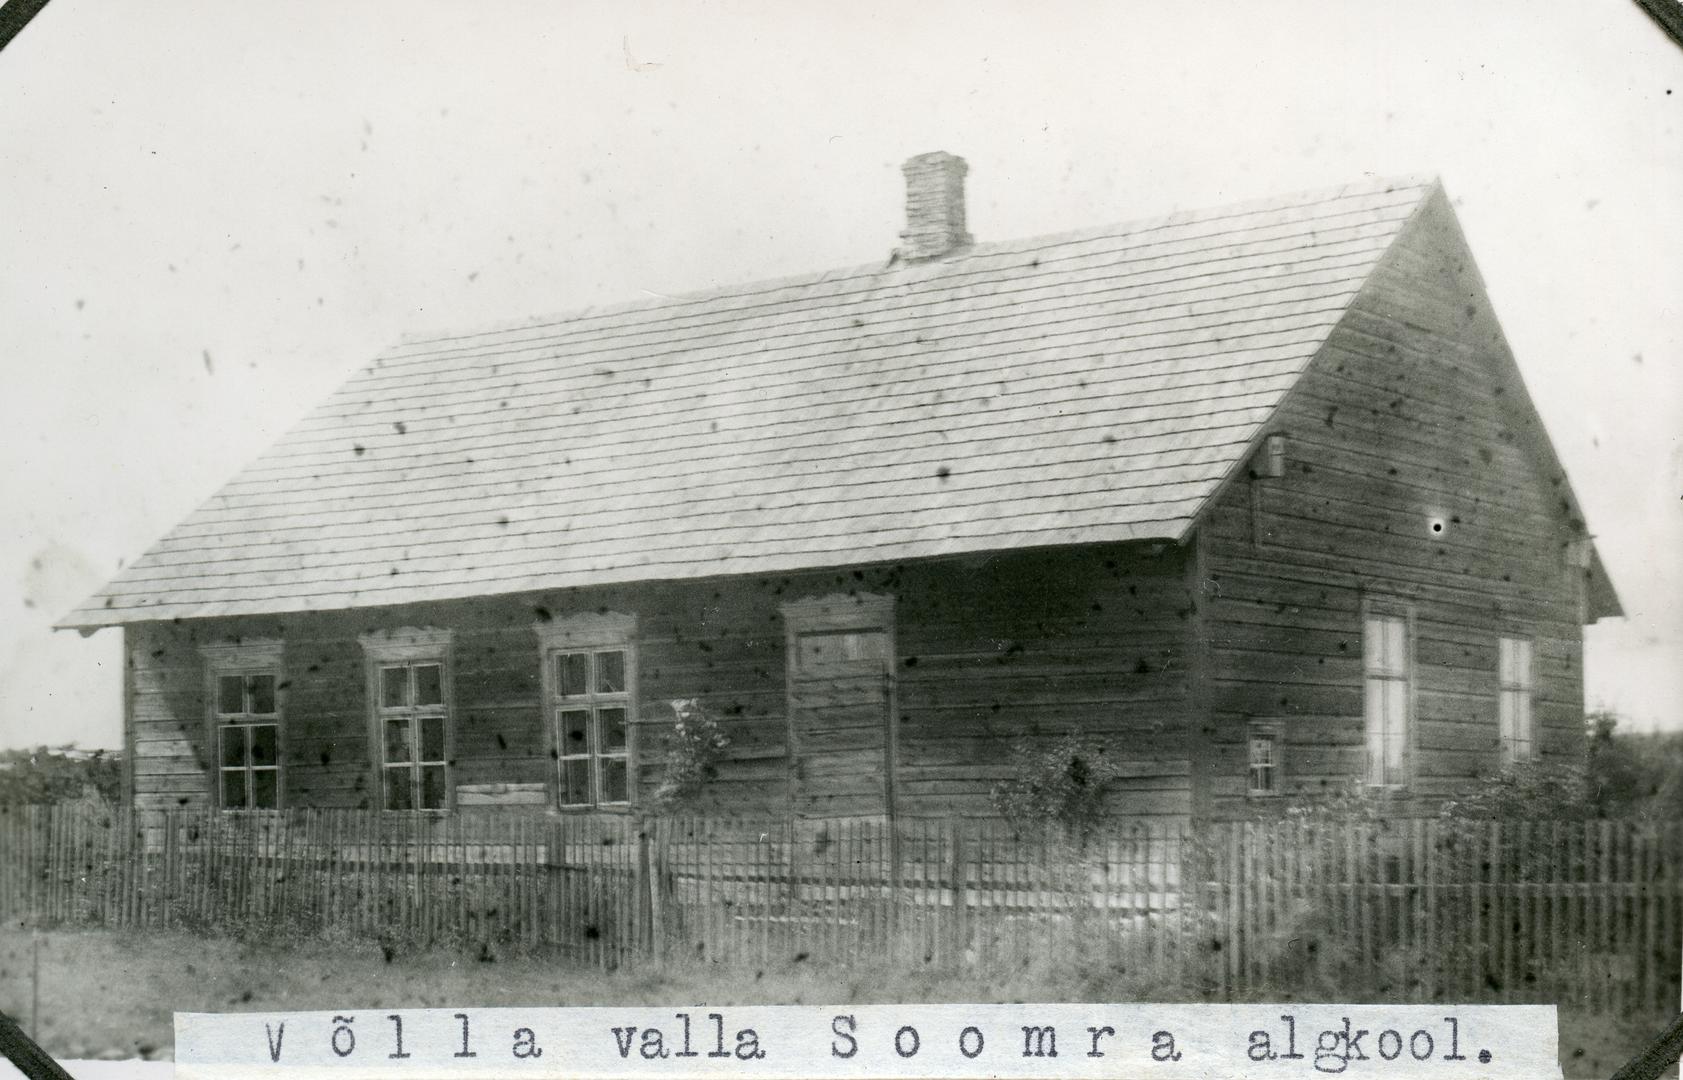 Võlla municipality Soomra 4-kl Start school building